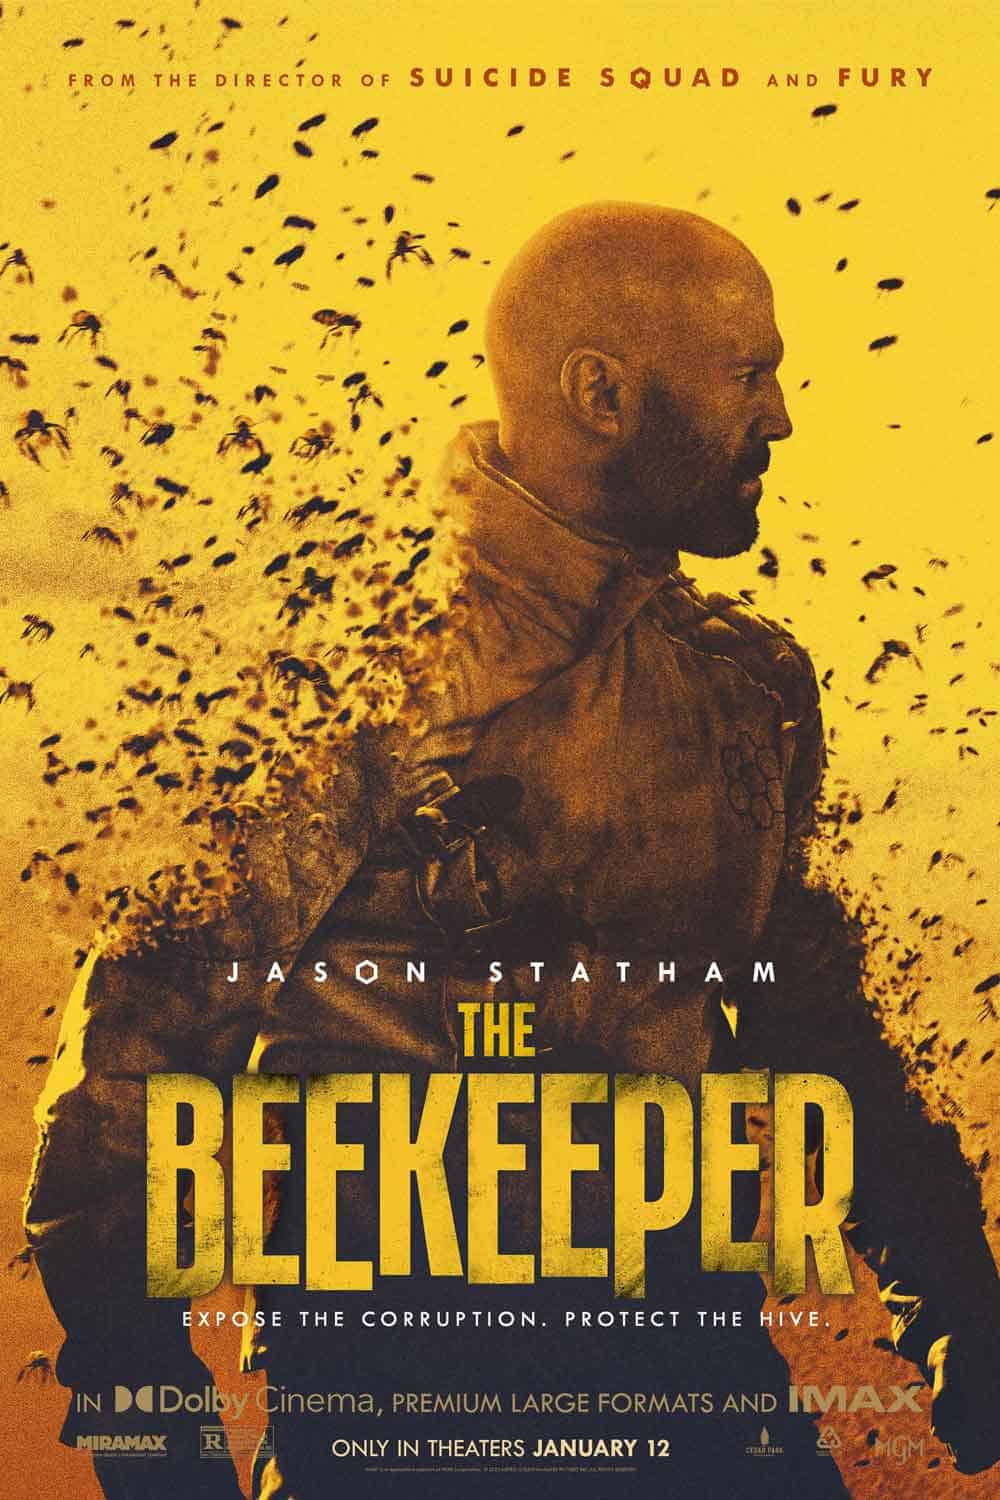 Beekeeper: El protector (2024)